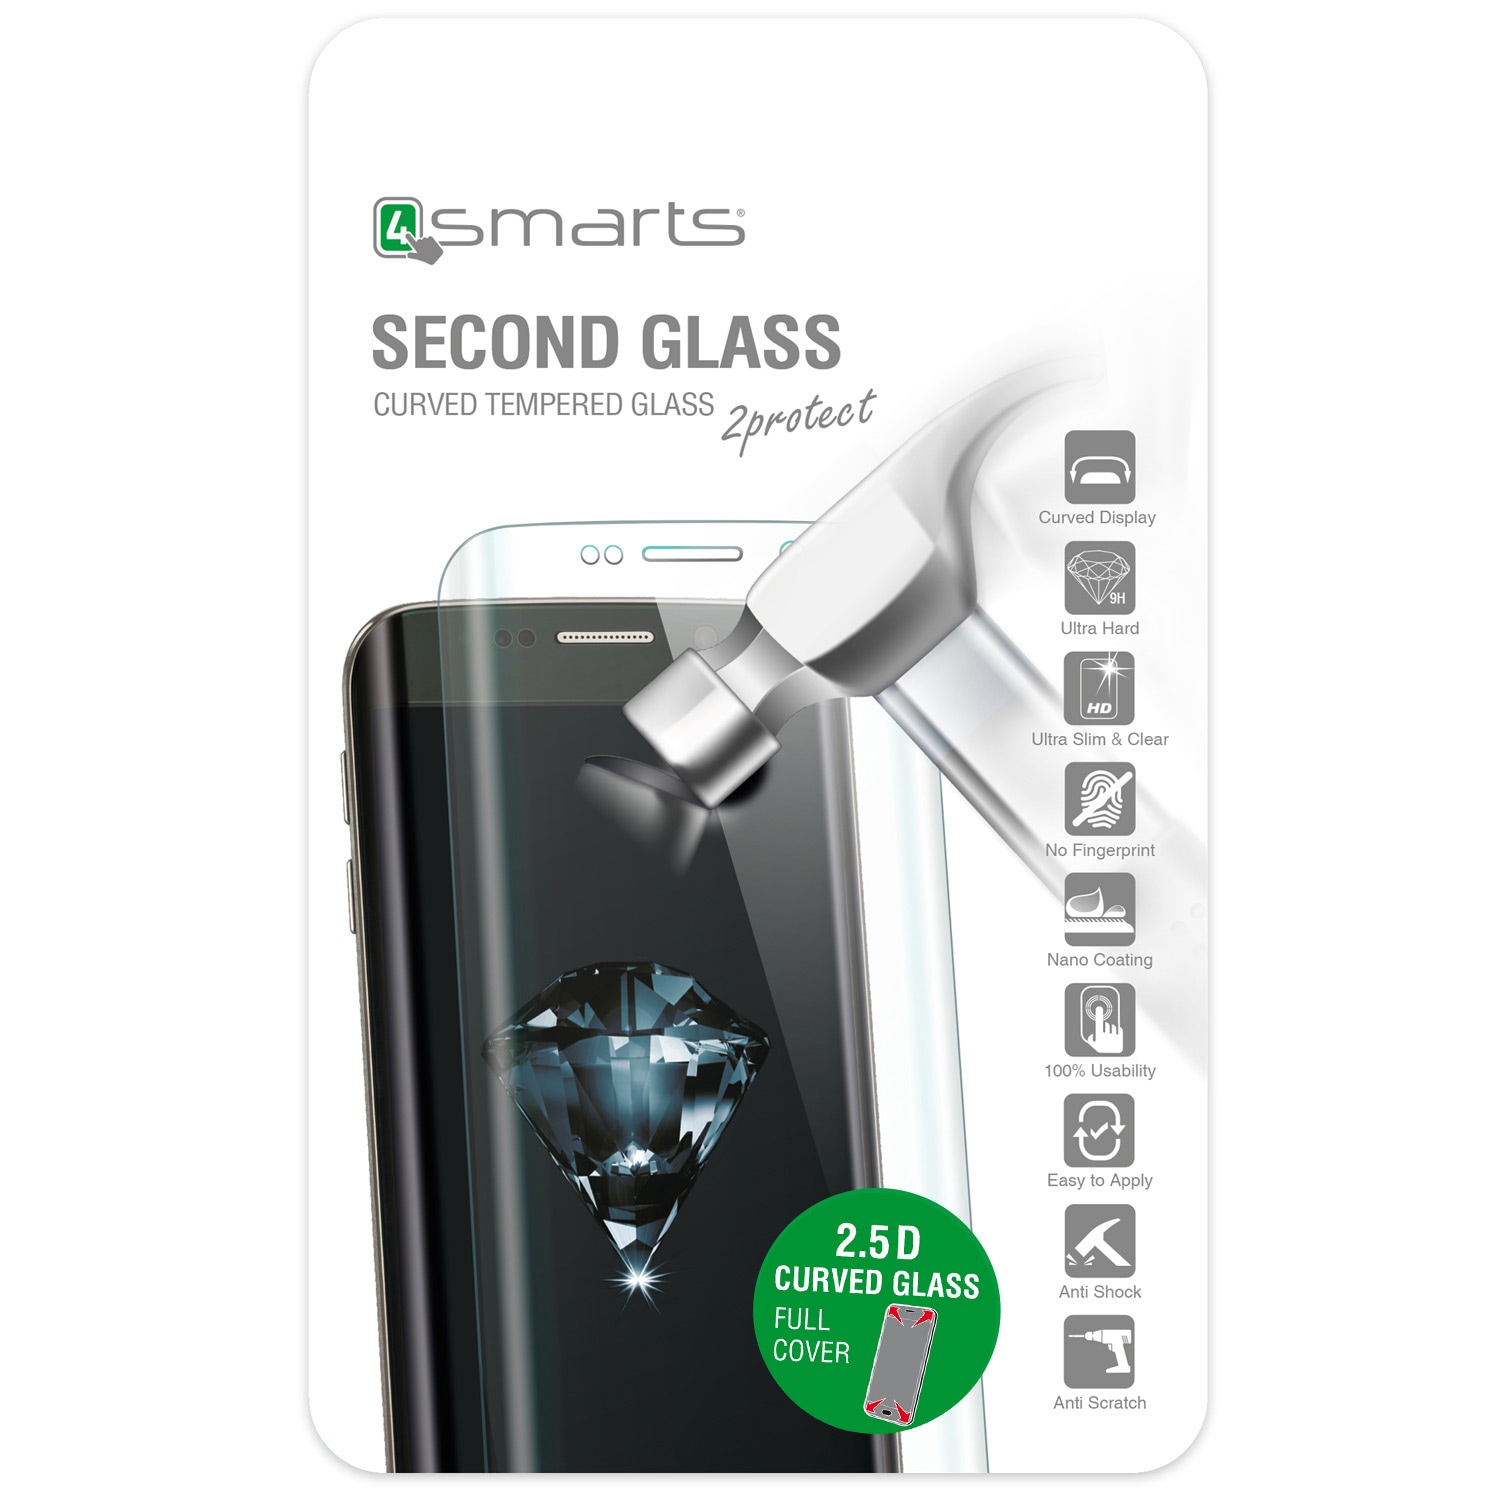 4smarts Second Glass Curved 2.5D til iPhone 6/6s Plus - Hvit